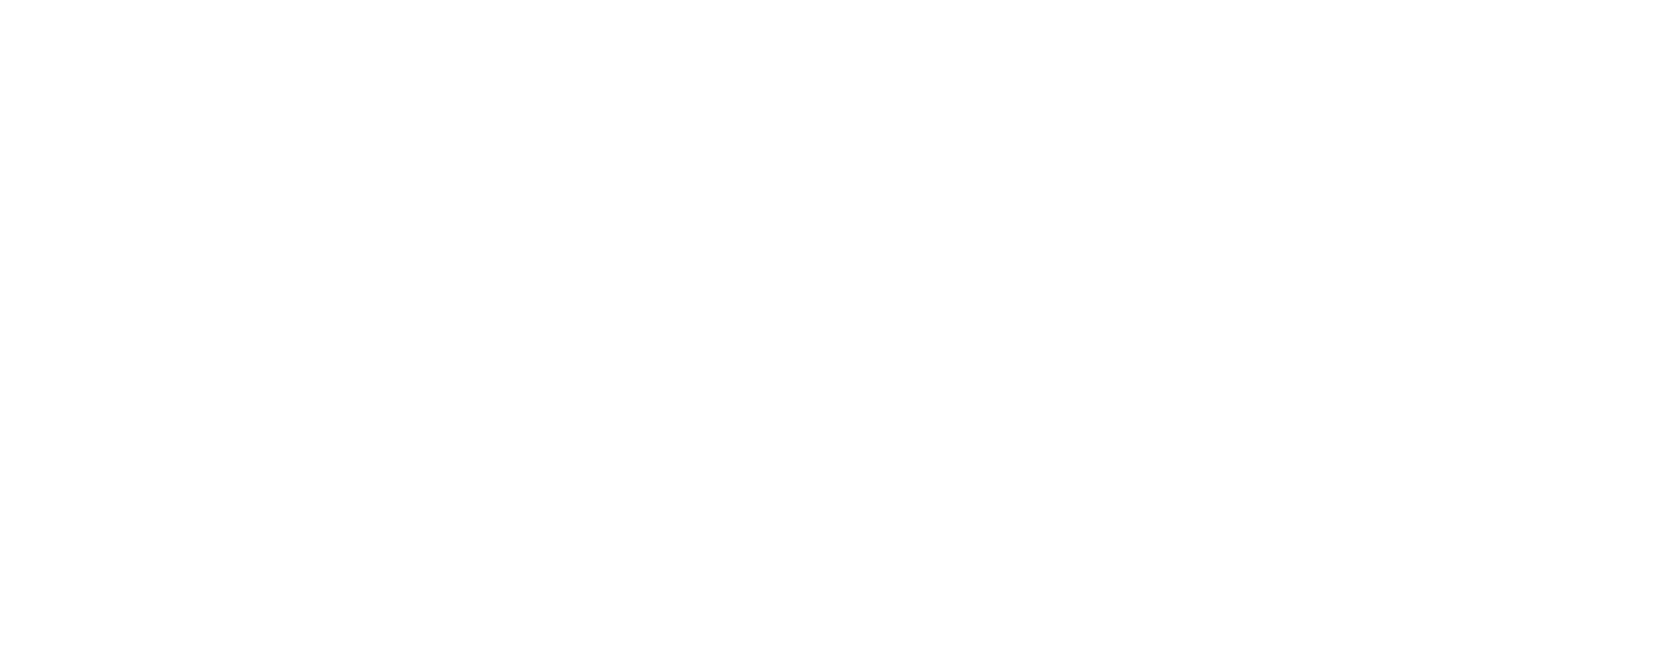 Mountaineer Fence logo